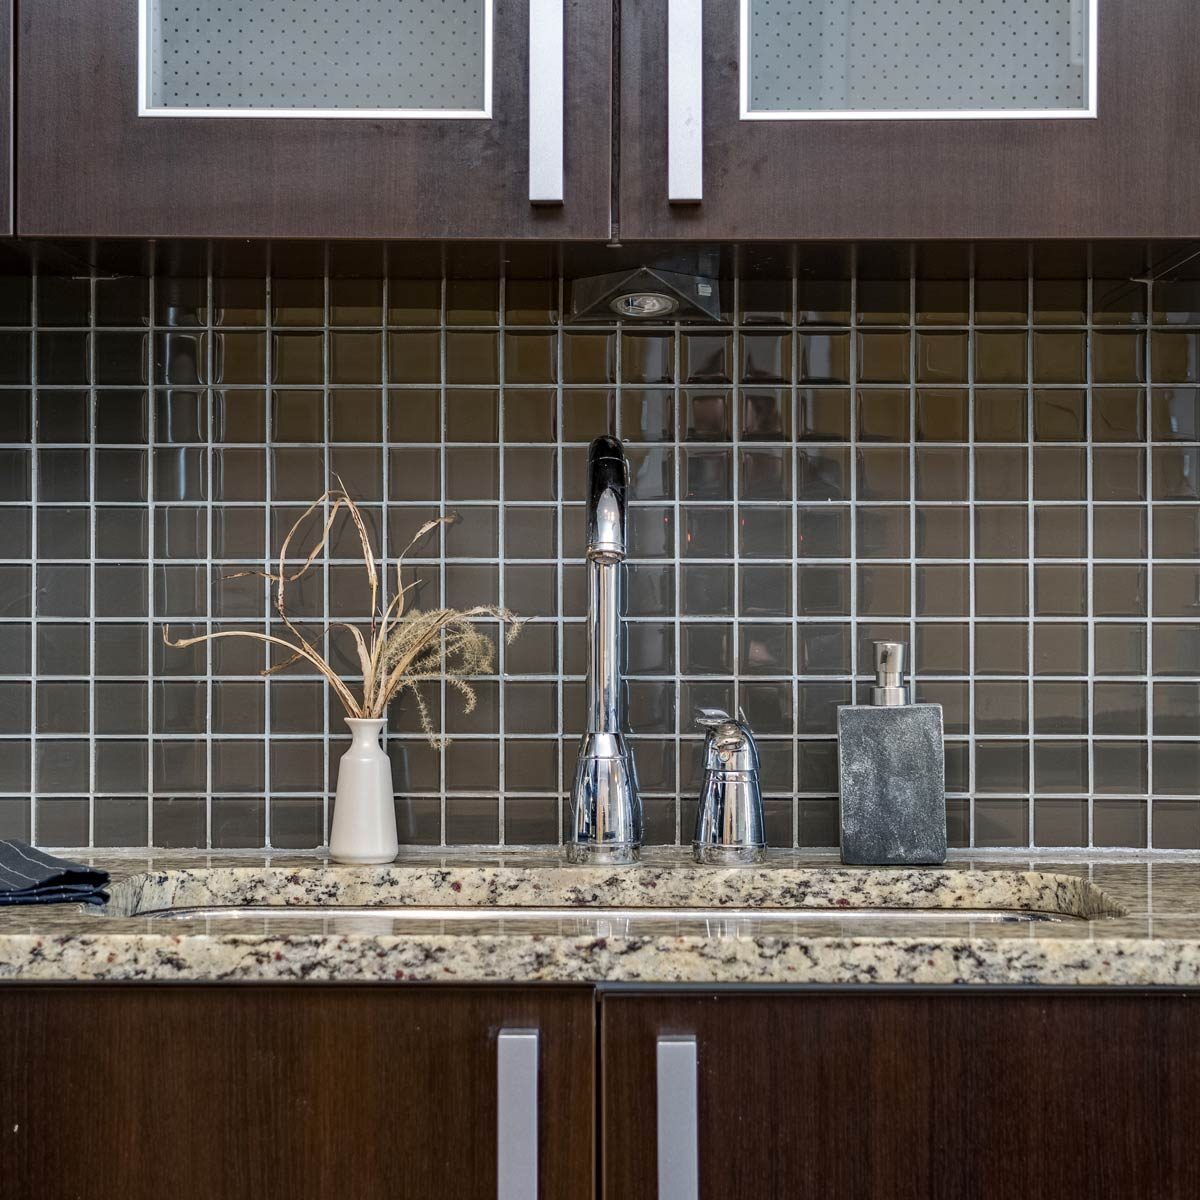 Best Kitchen Backsplash Ideas For Dark Cabinets The Family Handyman